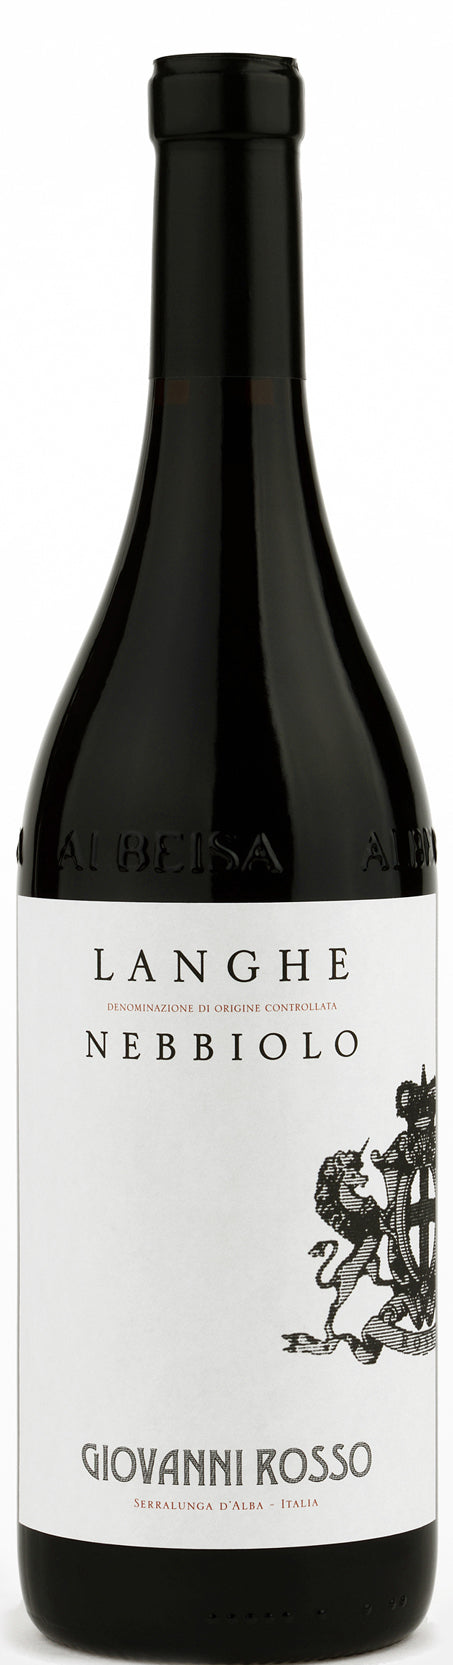 Giovanni Rosso Nebbiolo Langhe-Bk wine depot corp 